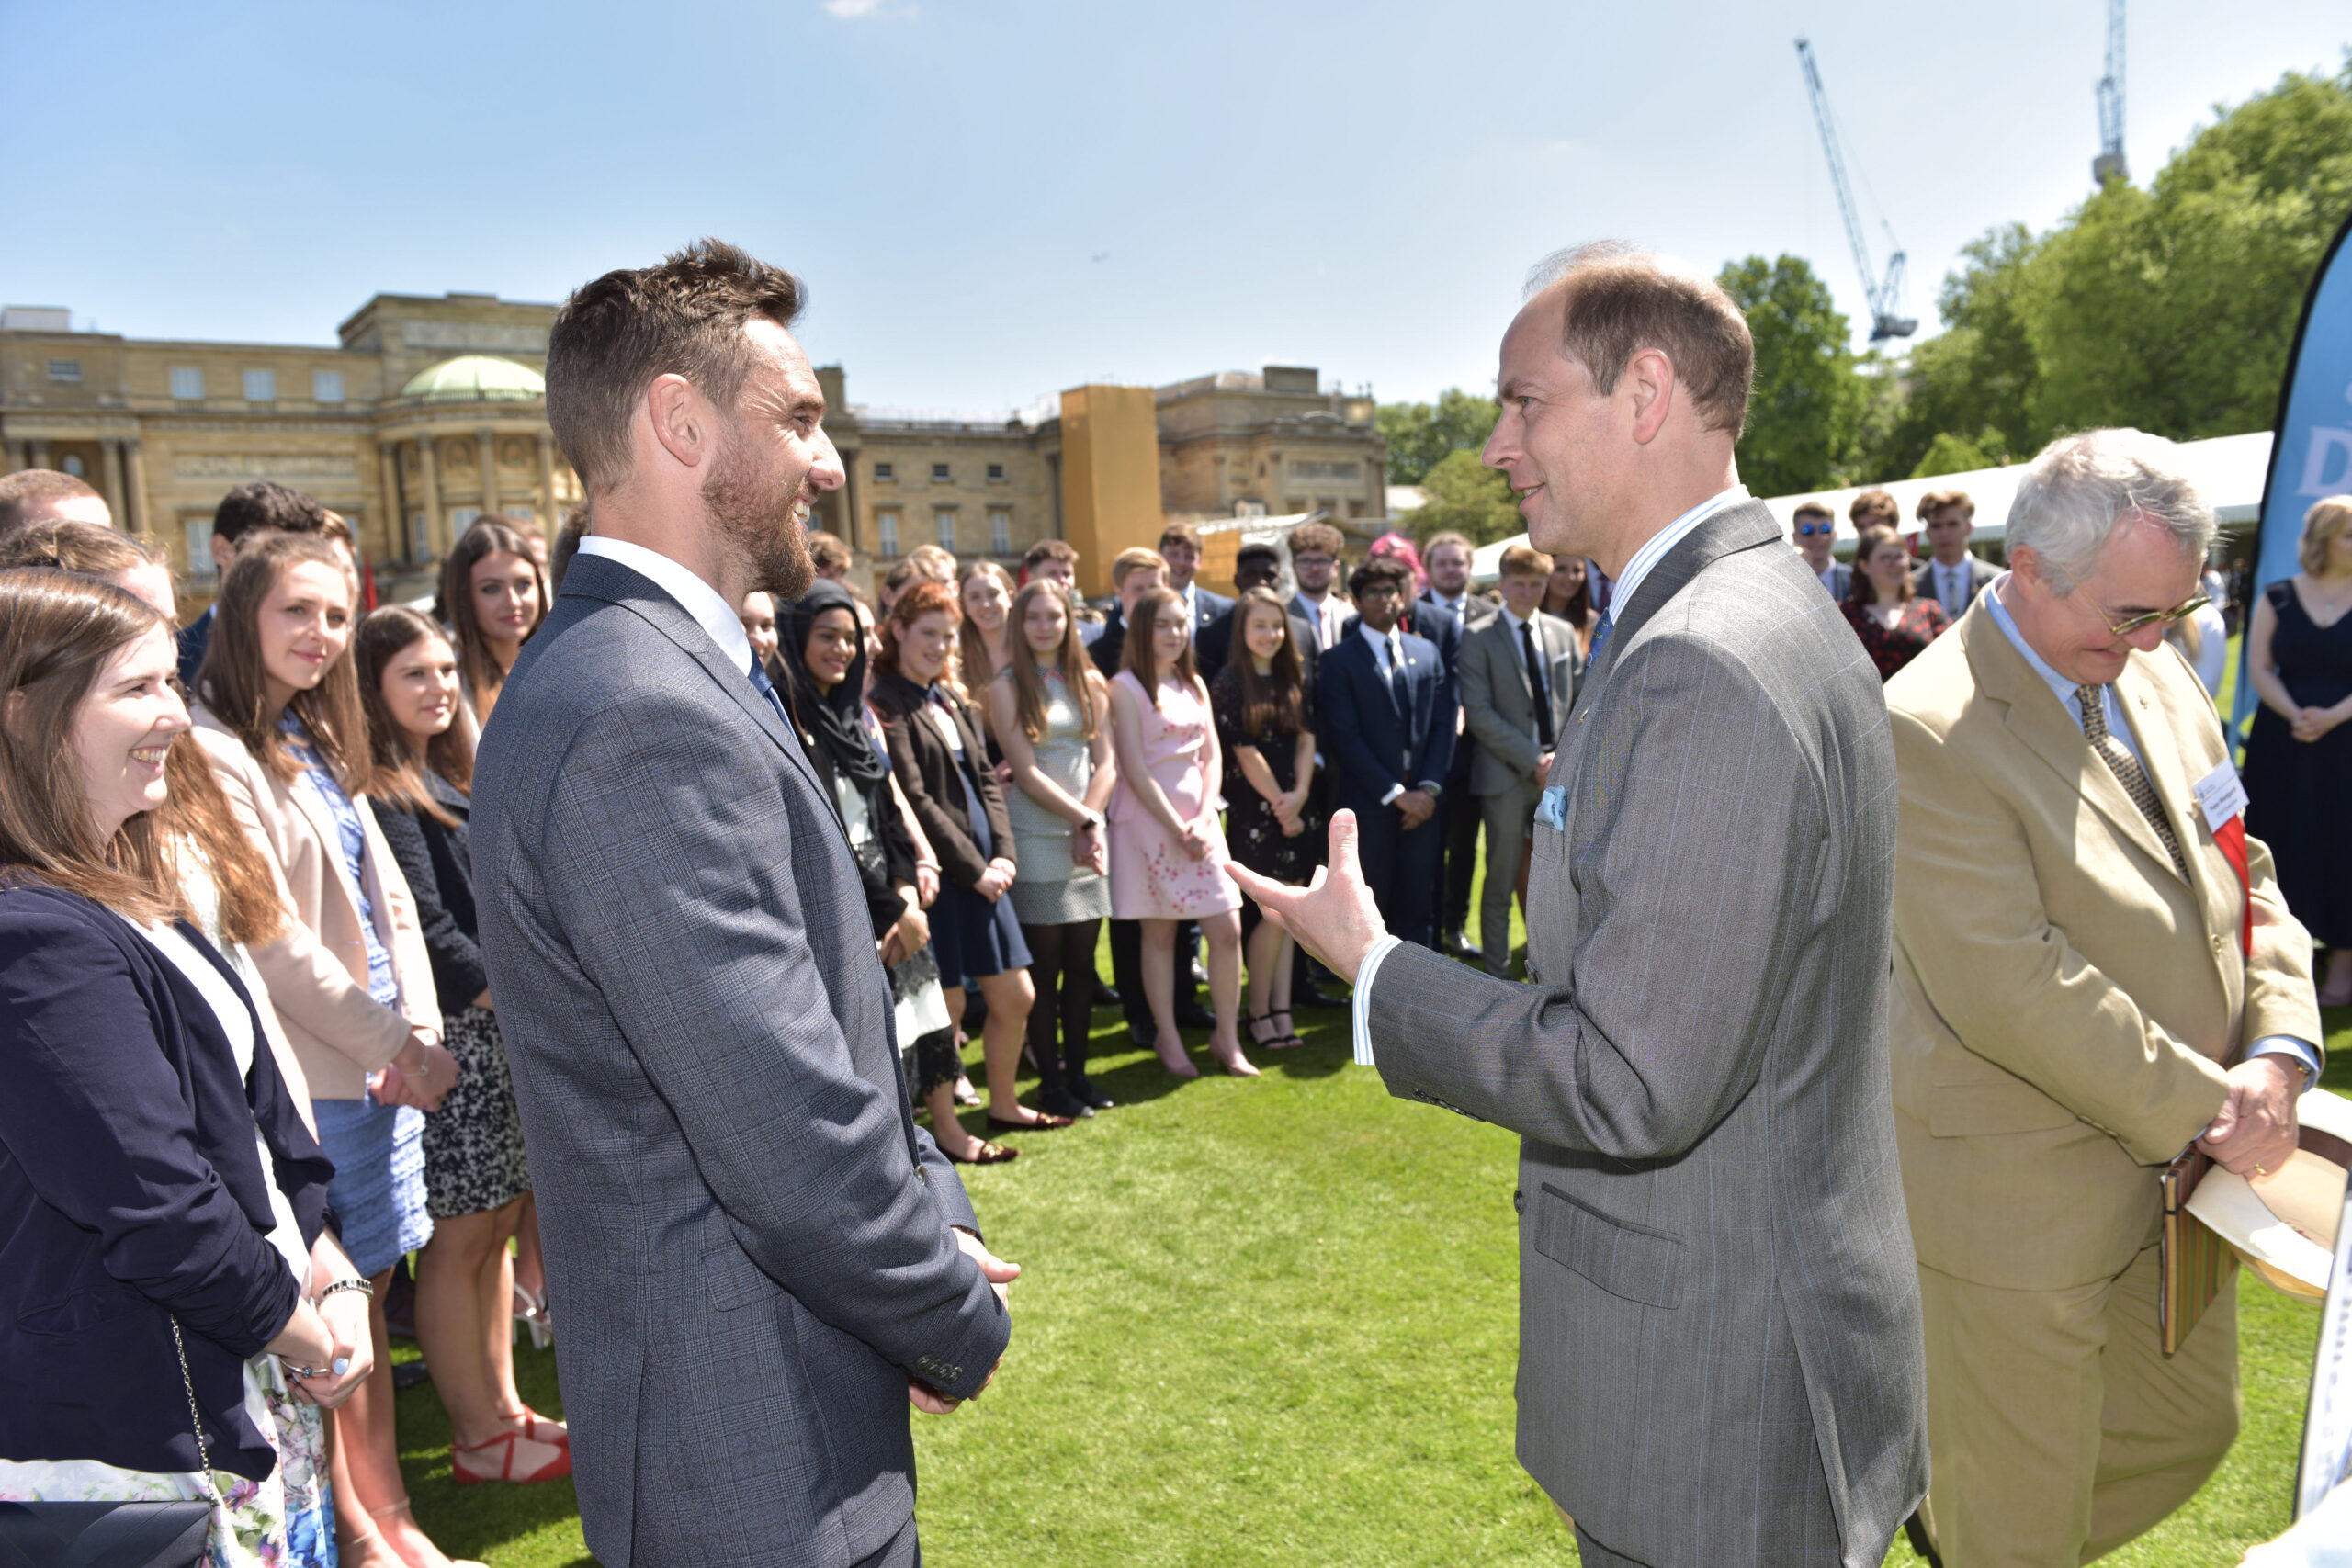 Prince Edward and Darren at Buckingham Palace